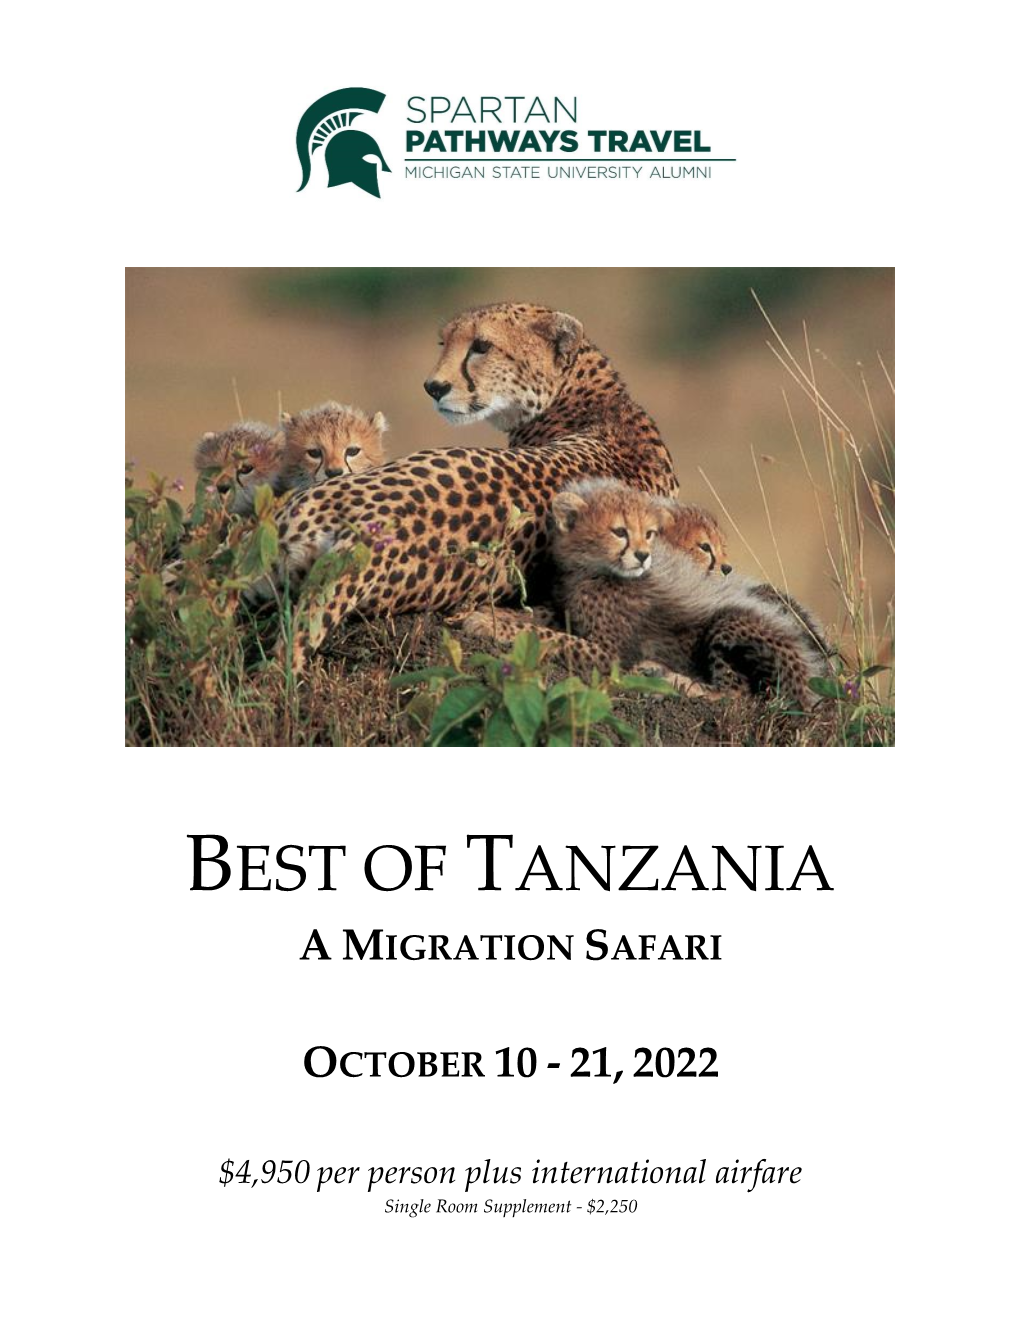 Best of Tanzania a Migration Safari